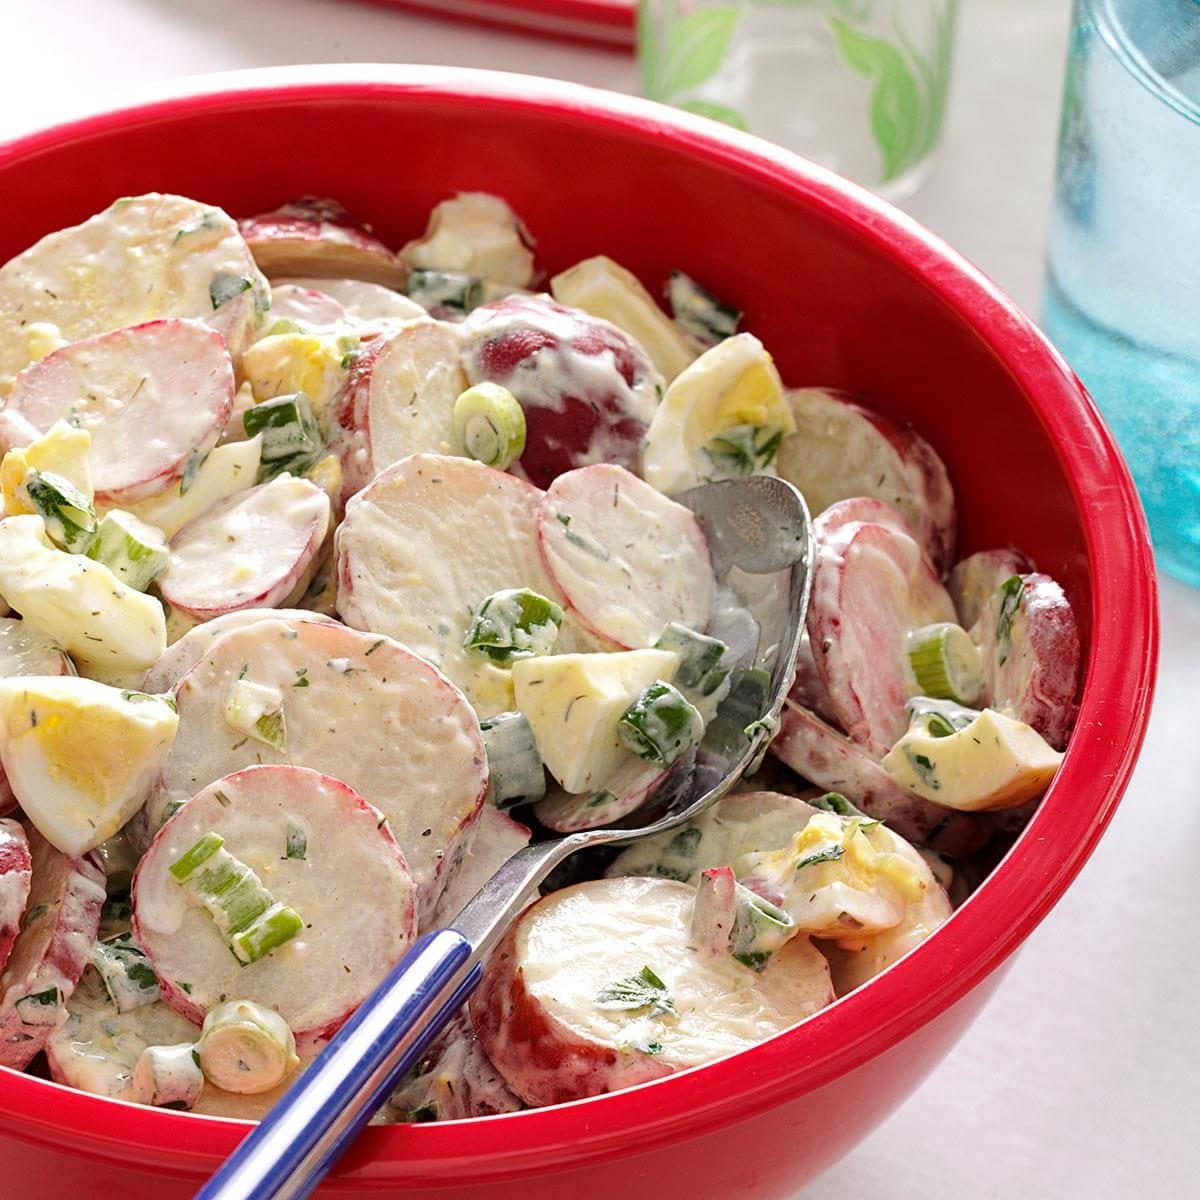 Creamy Red Potato Salad Recipe: How to Make It